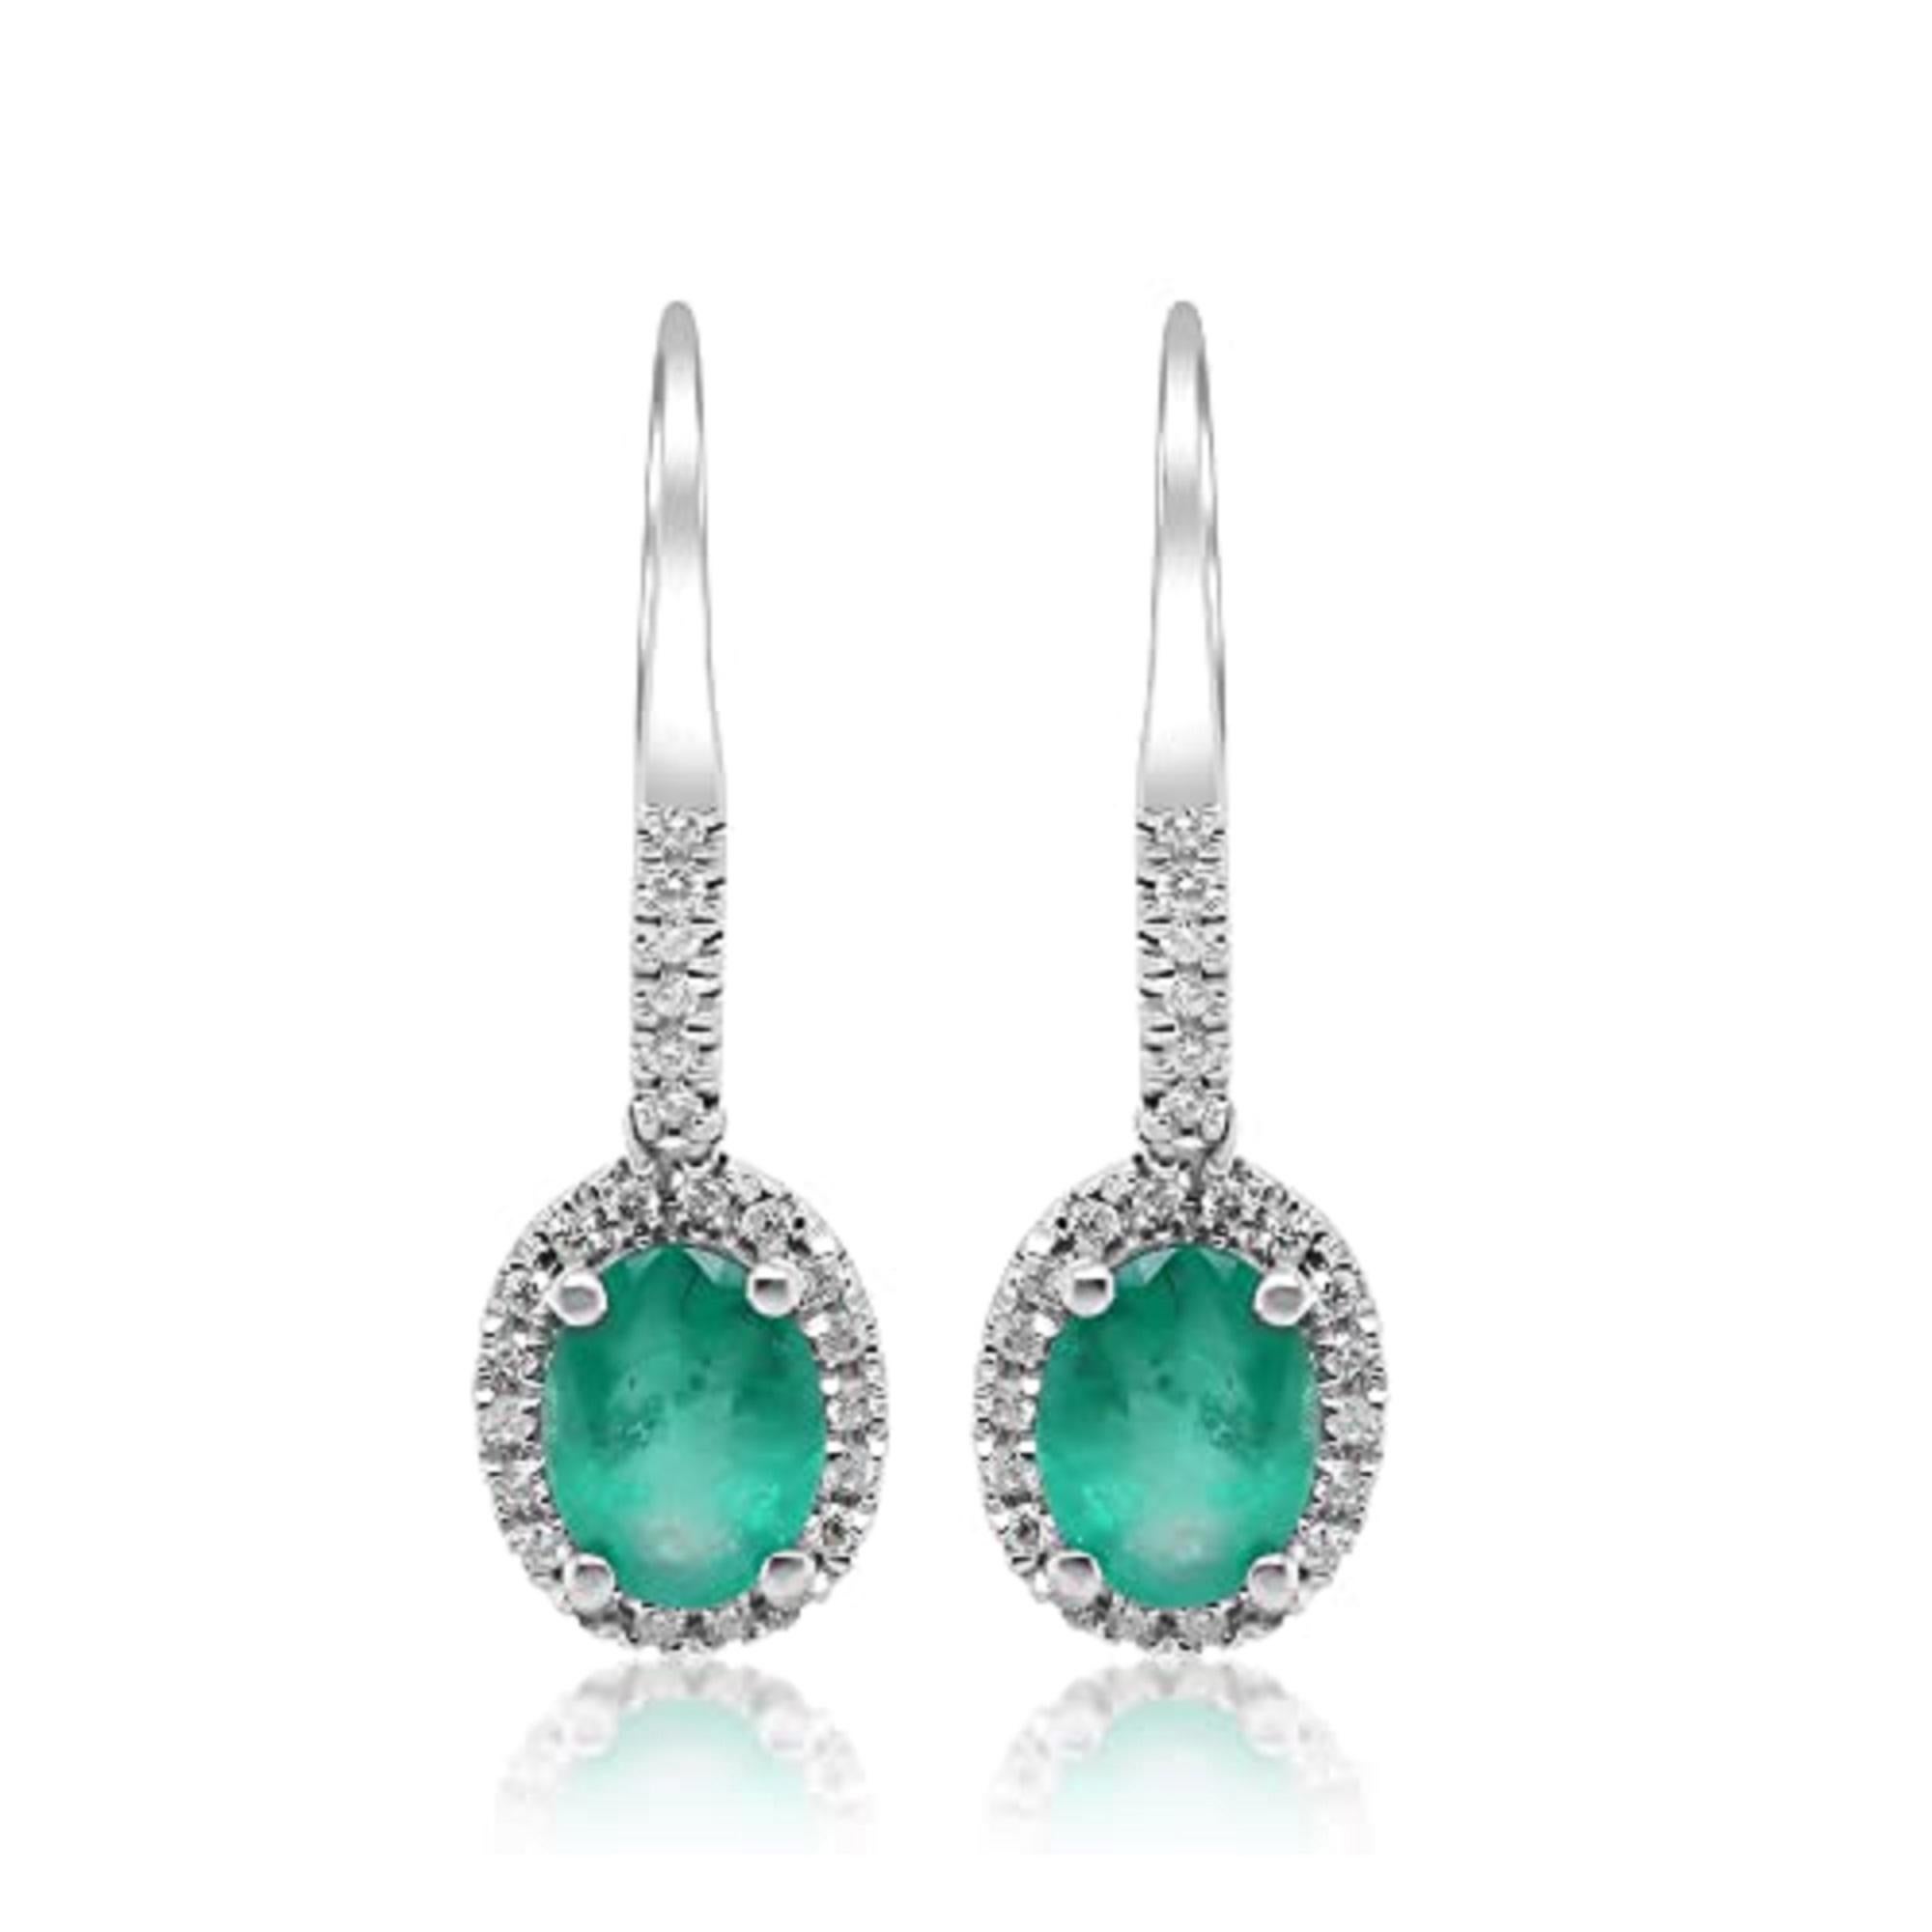 Oval Cut Gin & Grace14K White Gold Zambian Emerald Earrings with Diamonds For Women For Sale